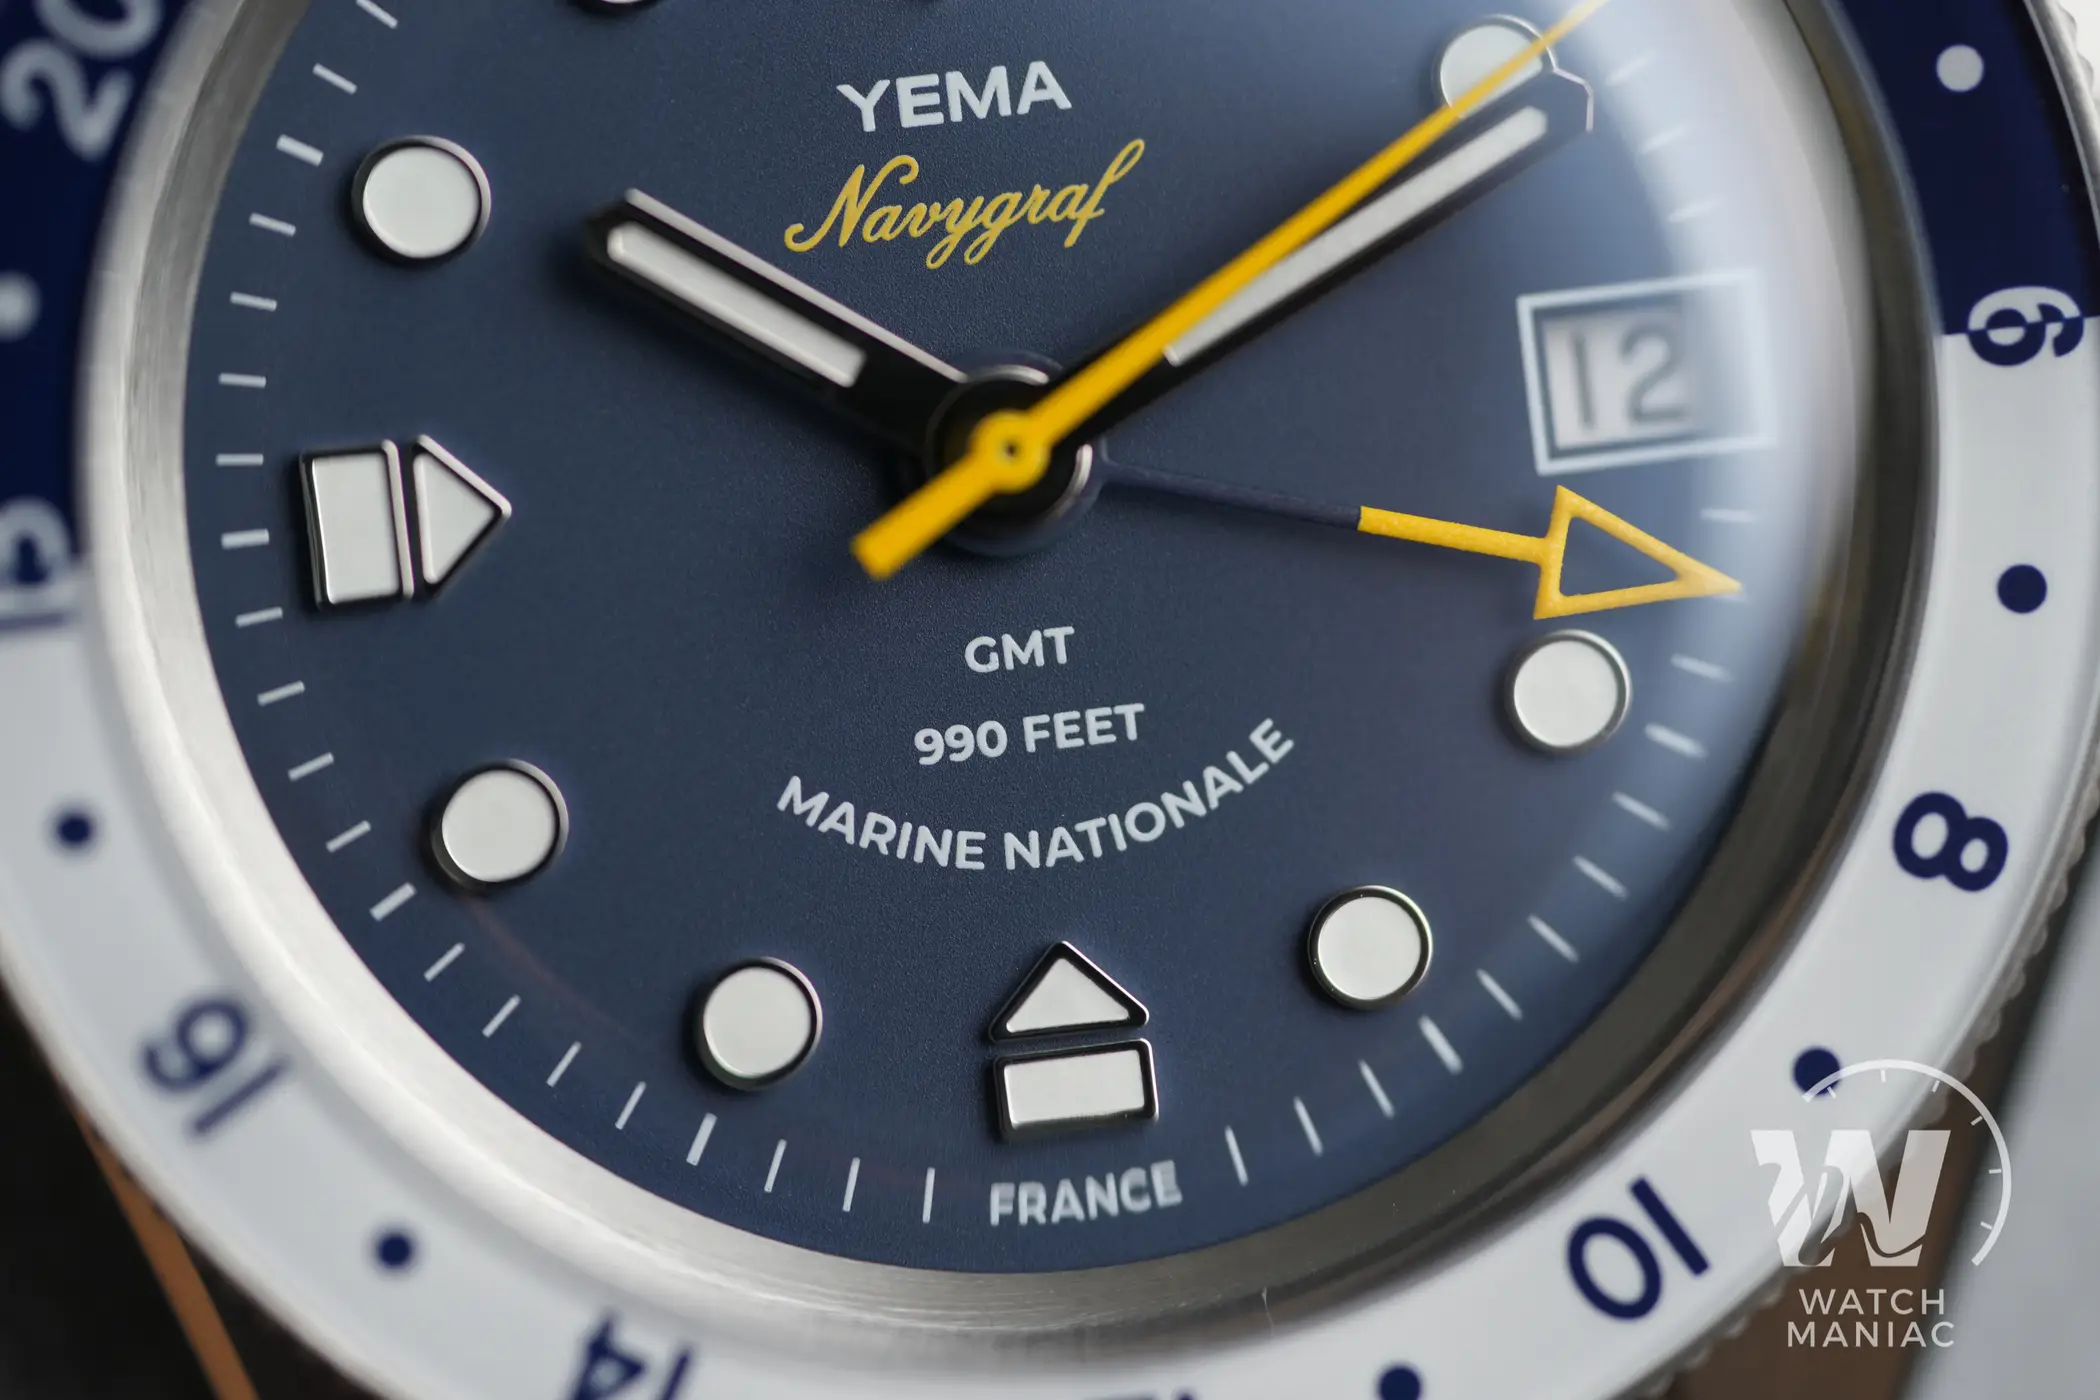 Yema Navygraf Marine Nationale 